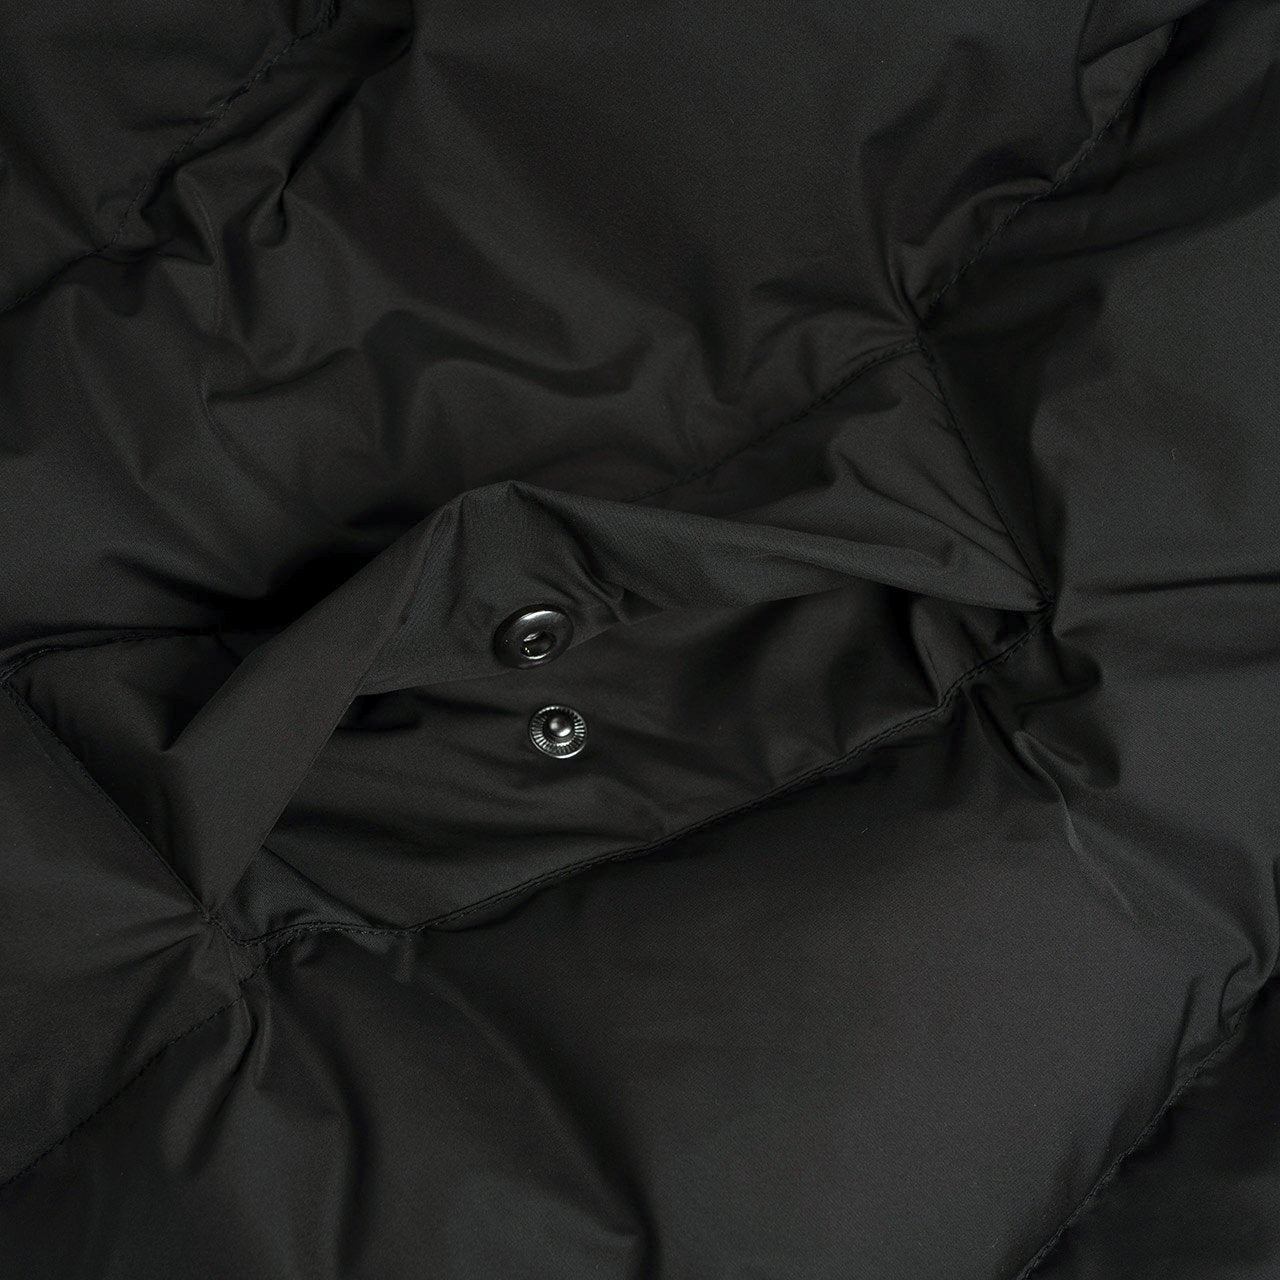 henrik vibskov henrik vibskov filo vest jacket (black)